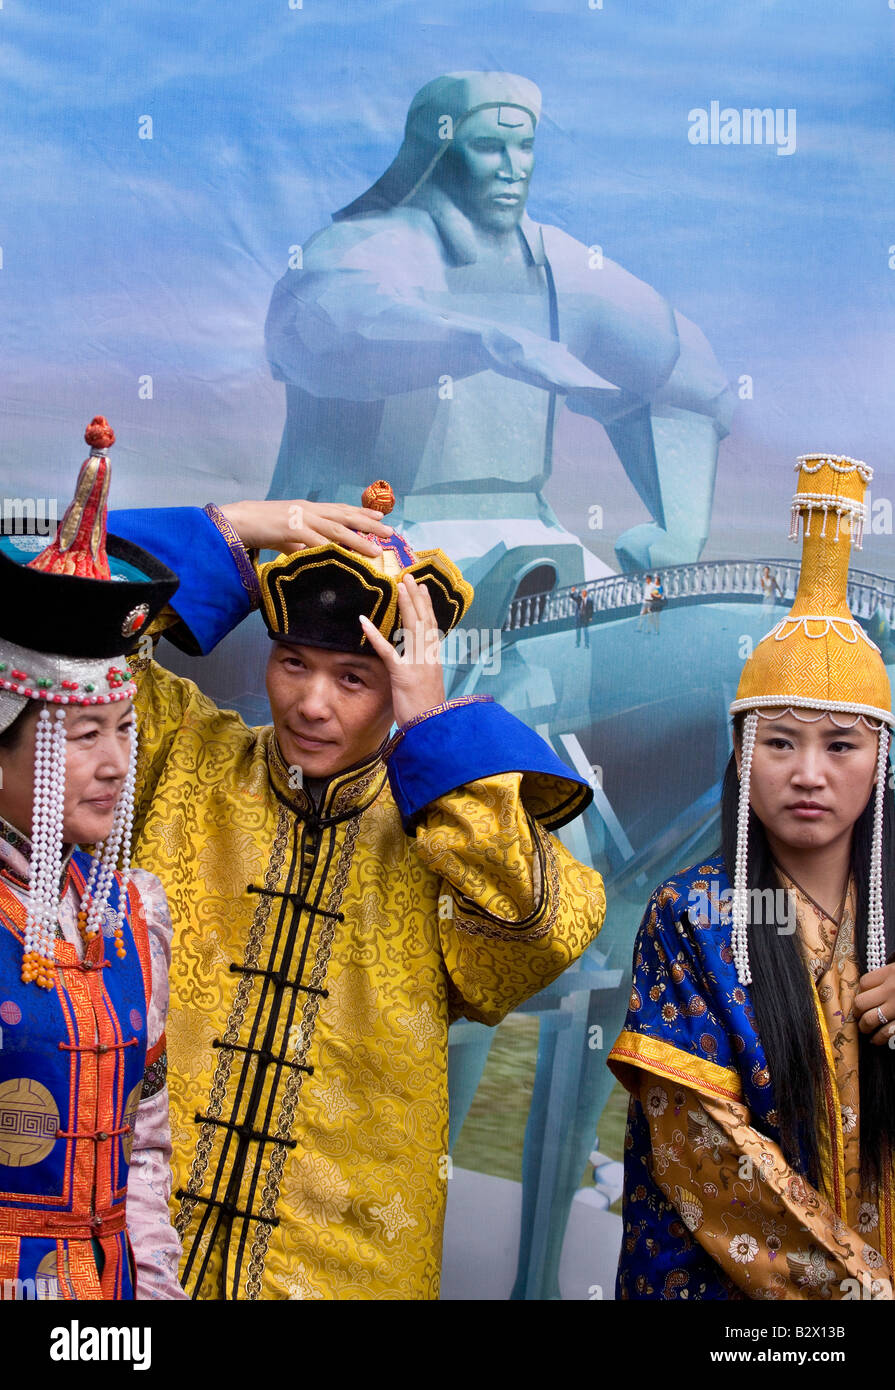 Woche das Naadam-Fest feiert das 800. Jubiläum oder der mongolischen Staat Dschingis Khan Photobooth Teilnehmer Kleid Stockfoto